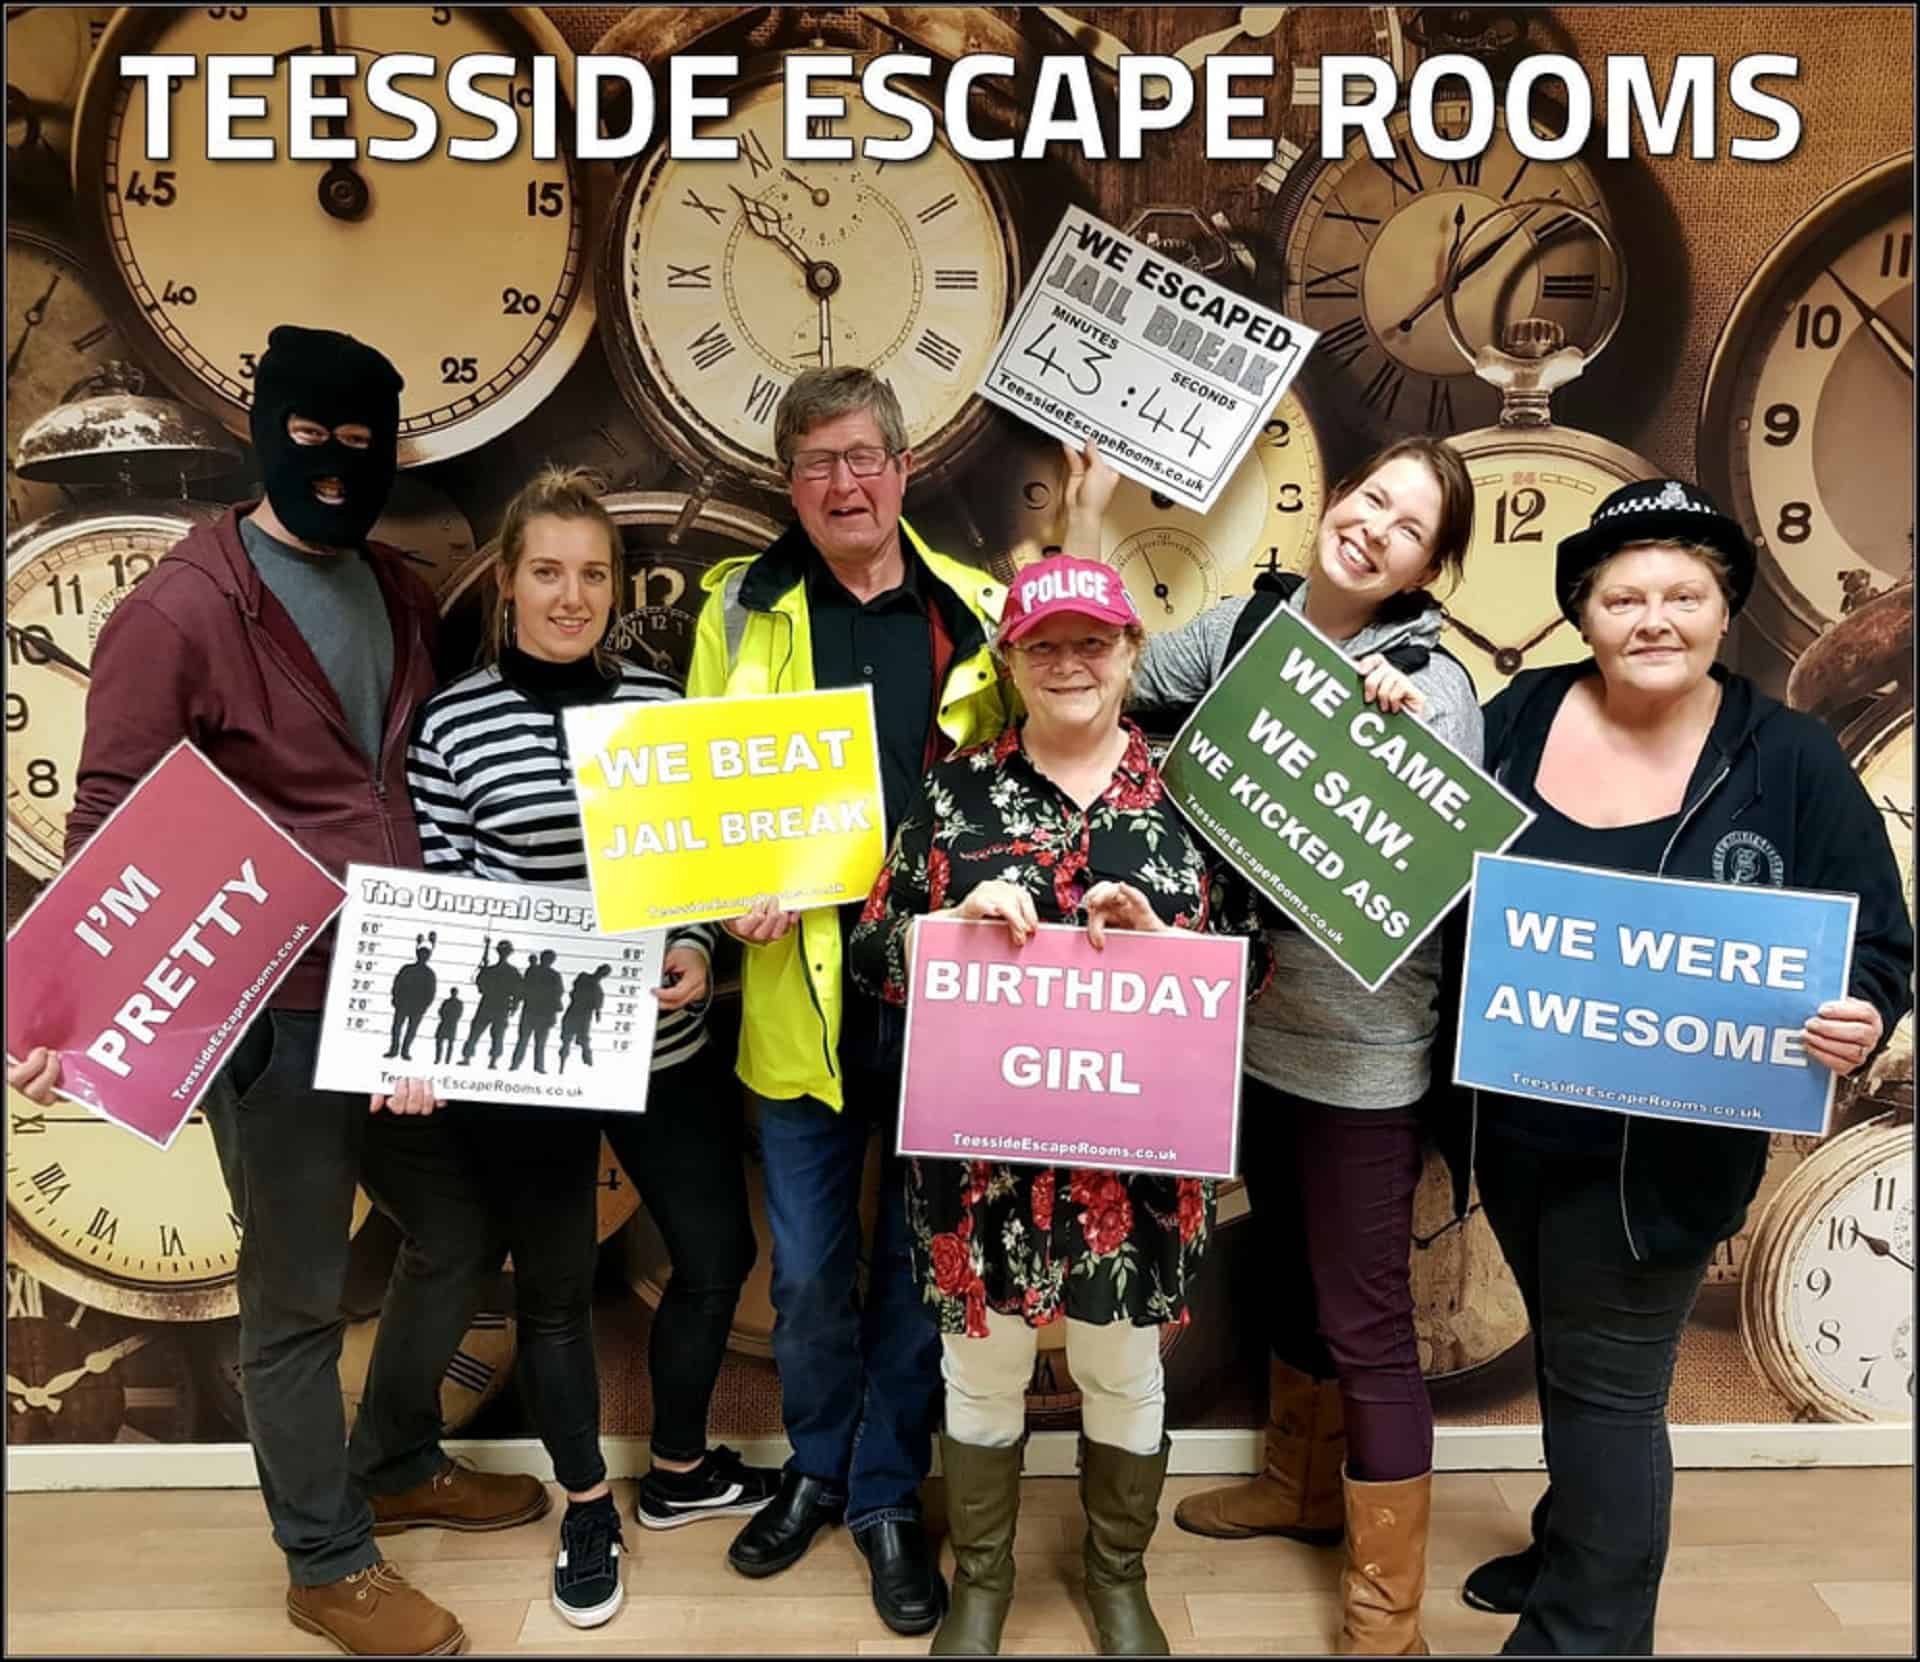 Teesside Escape Rooms in UK